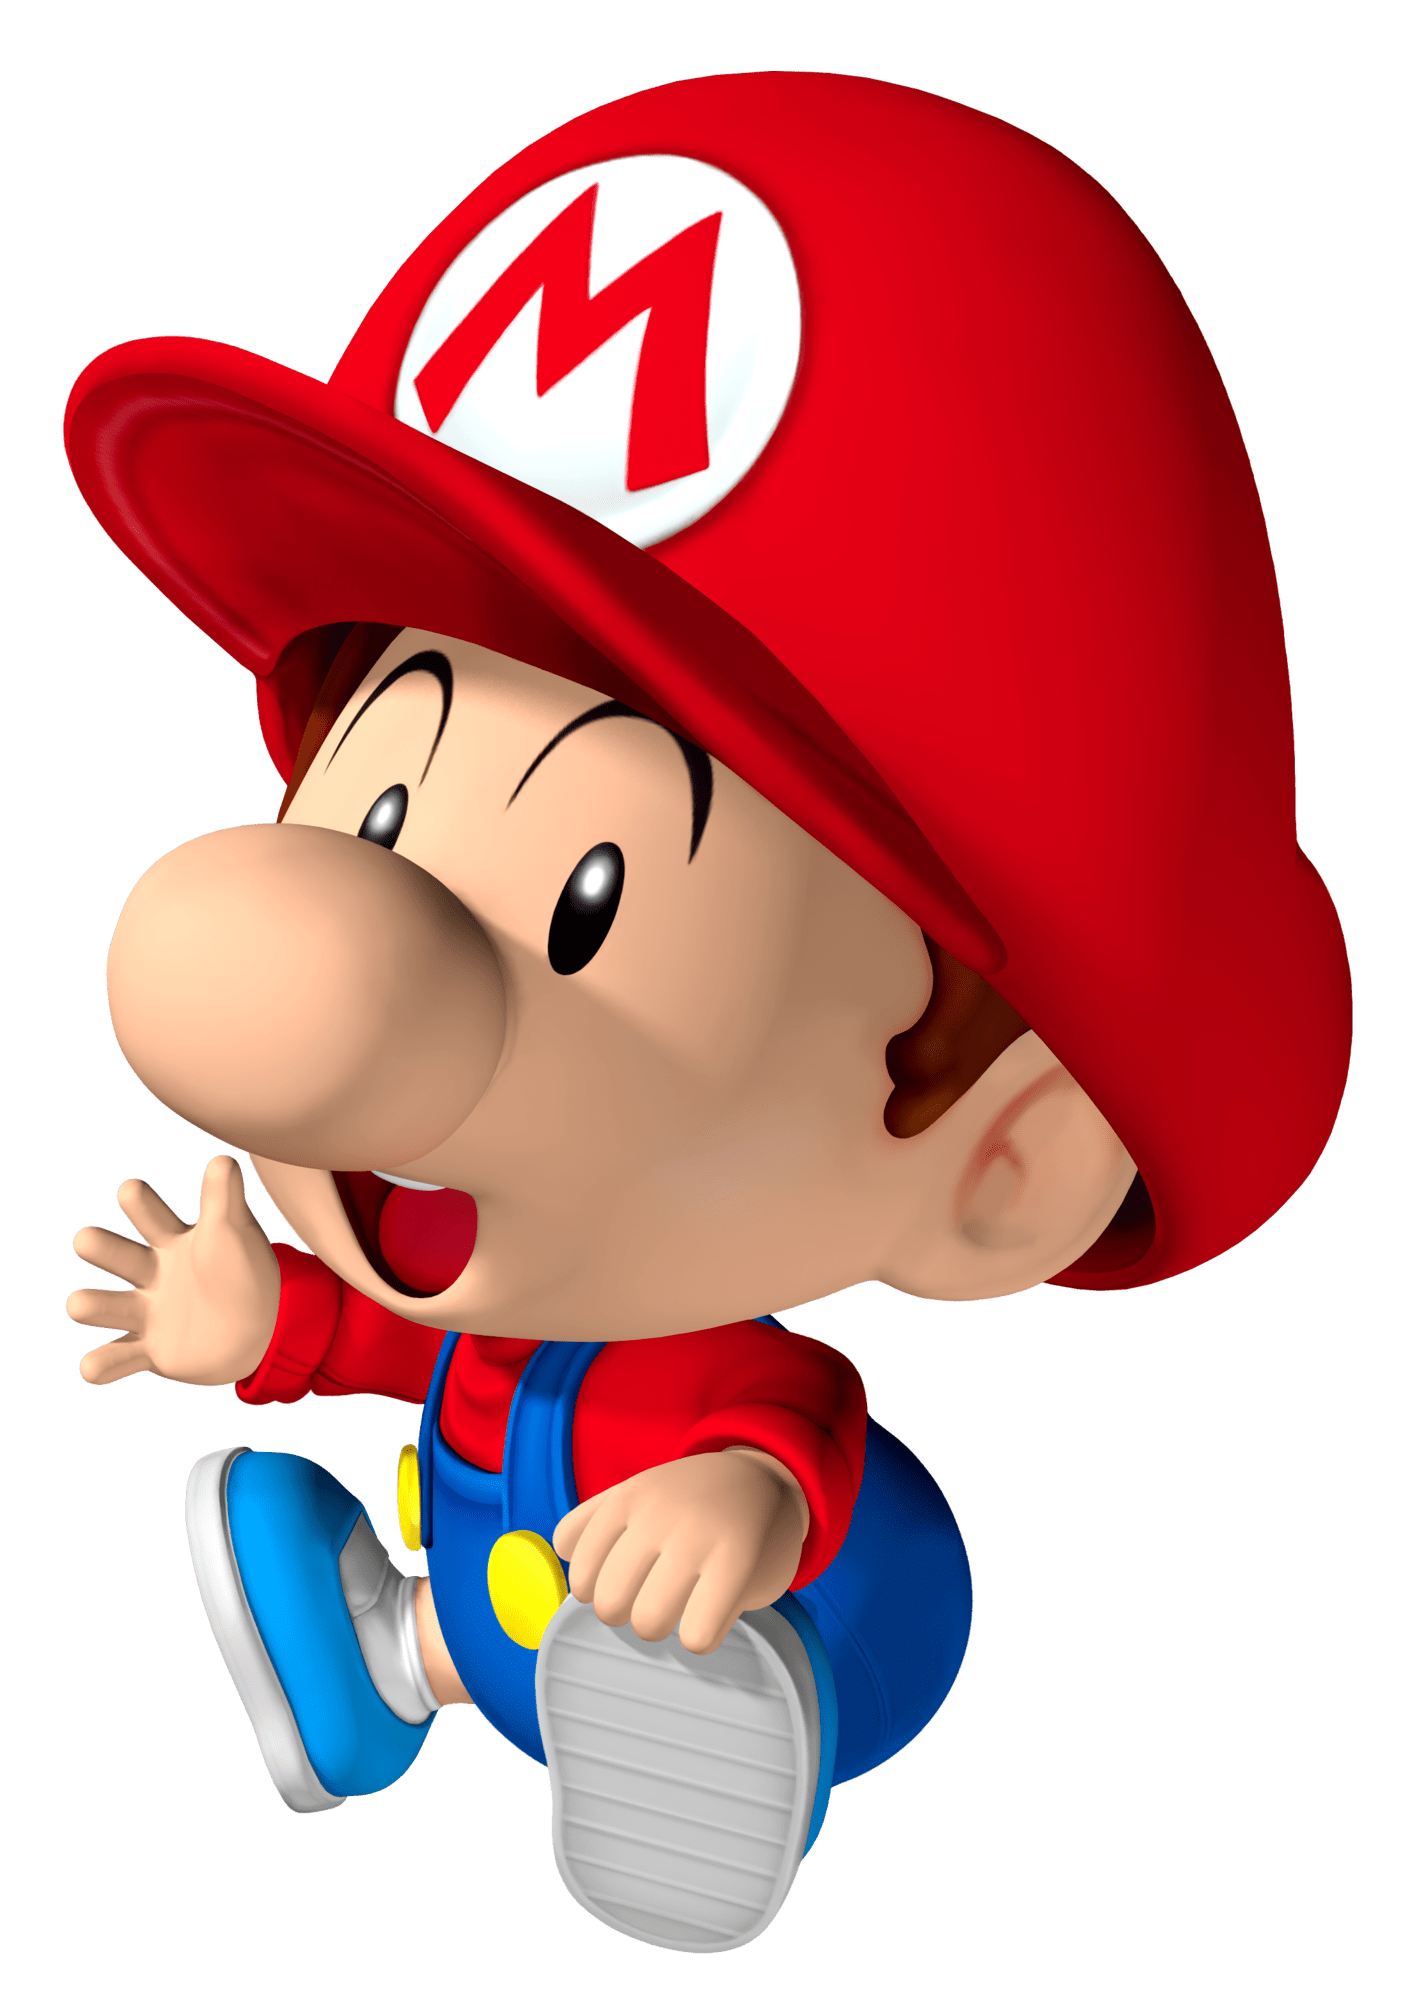 Mario image size clipart 2